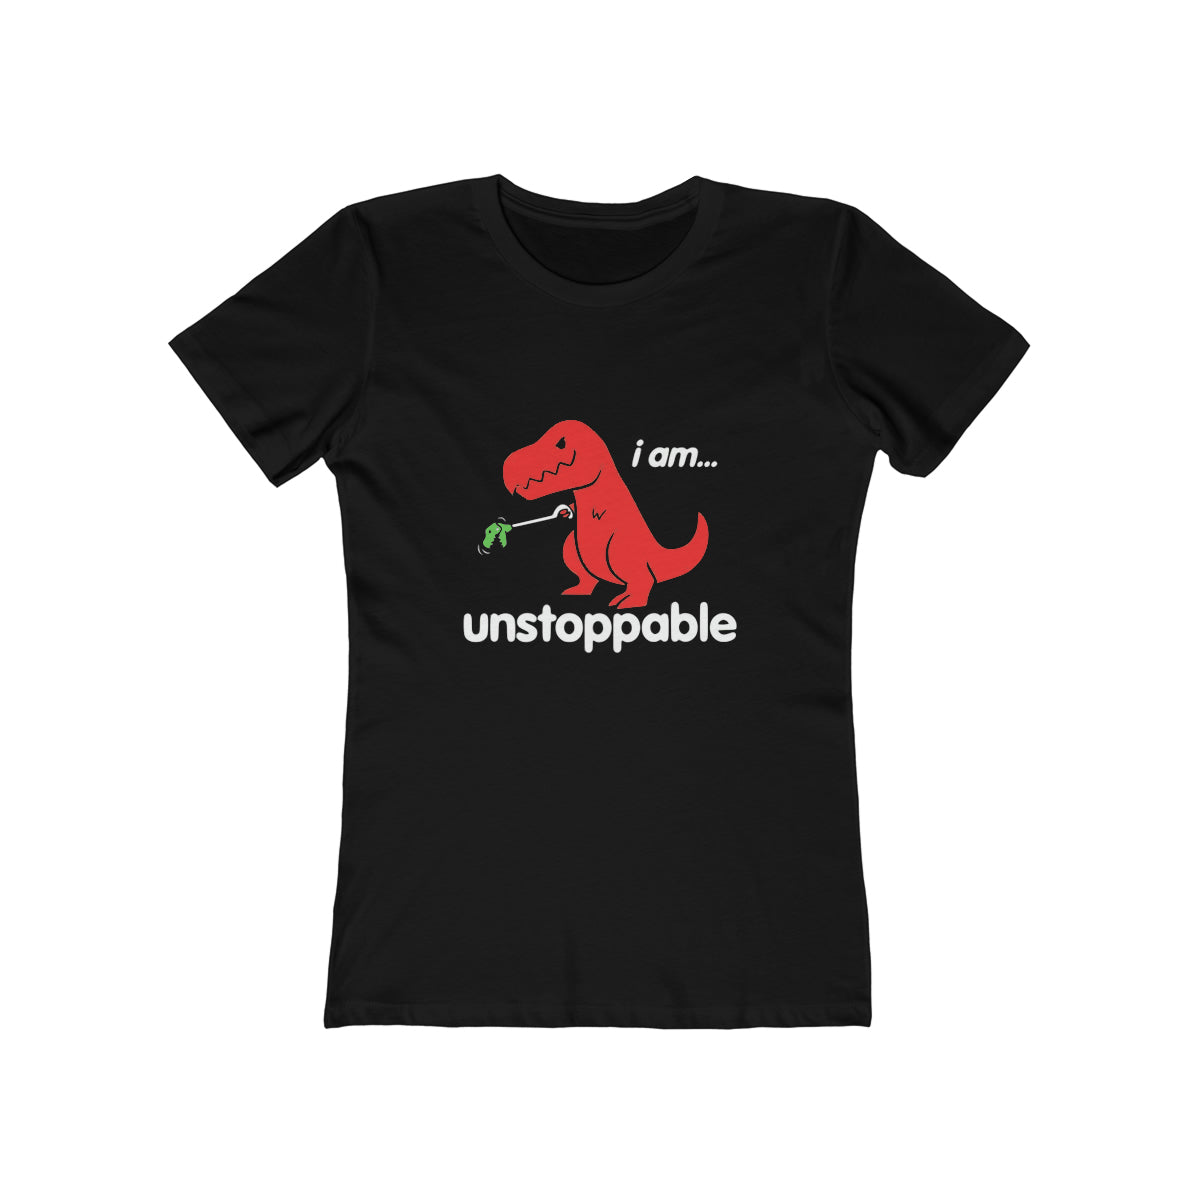 I Am Unstoppable - Women's T-shirt